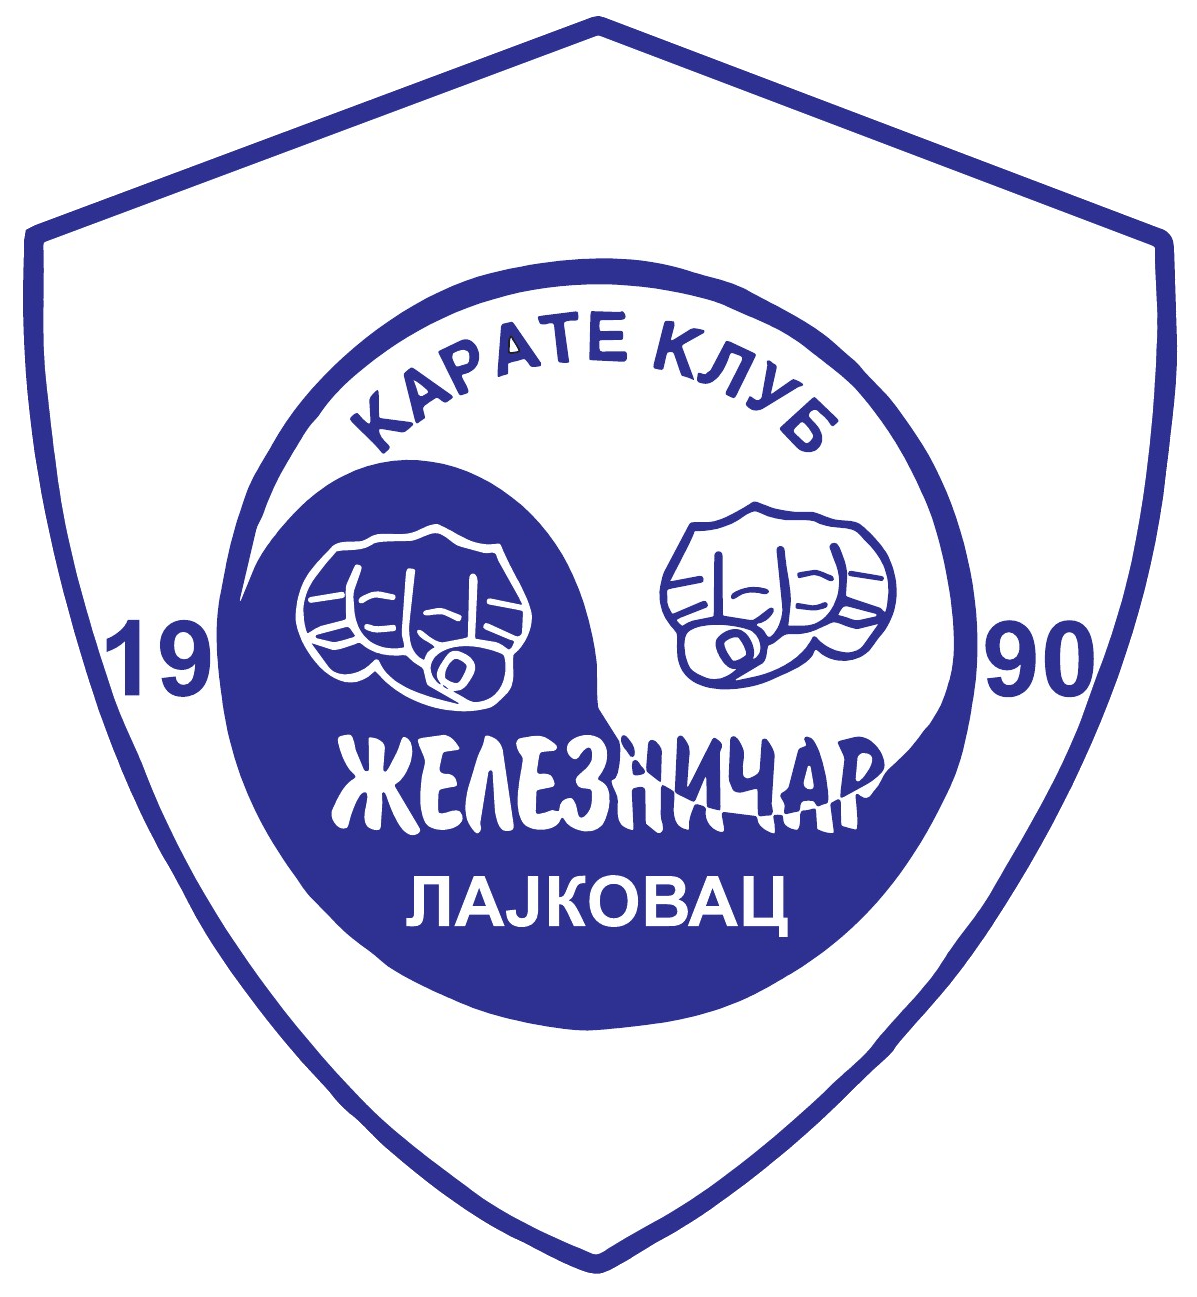 Karate Klub Zeleznicar Logo